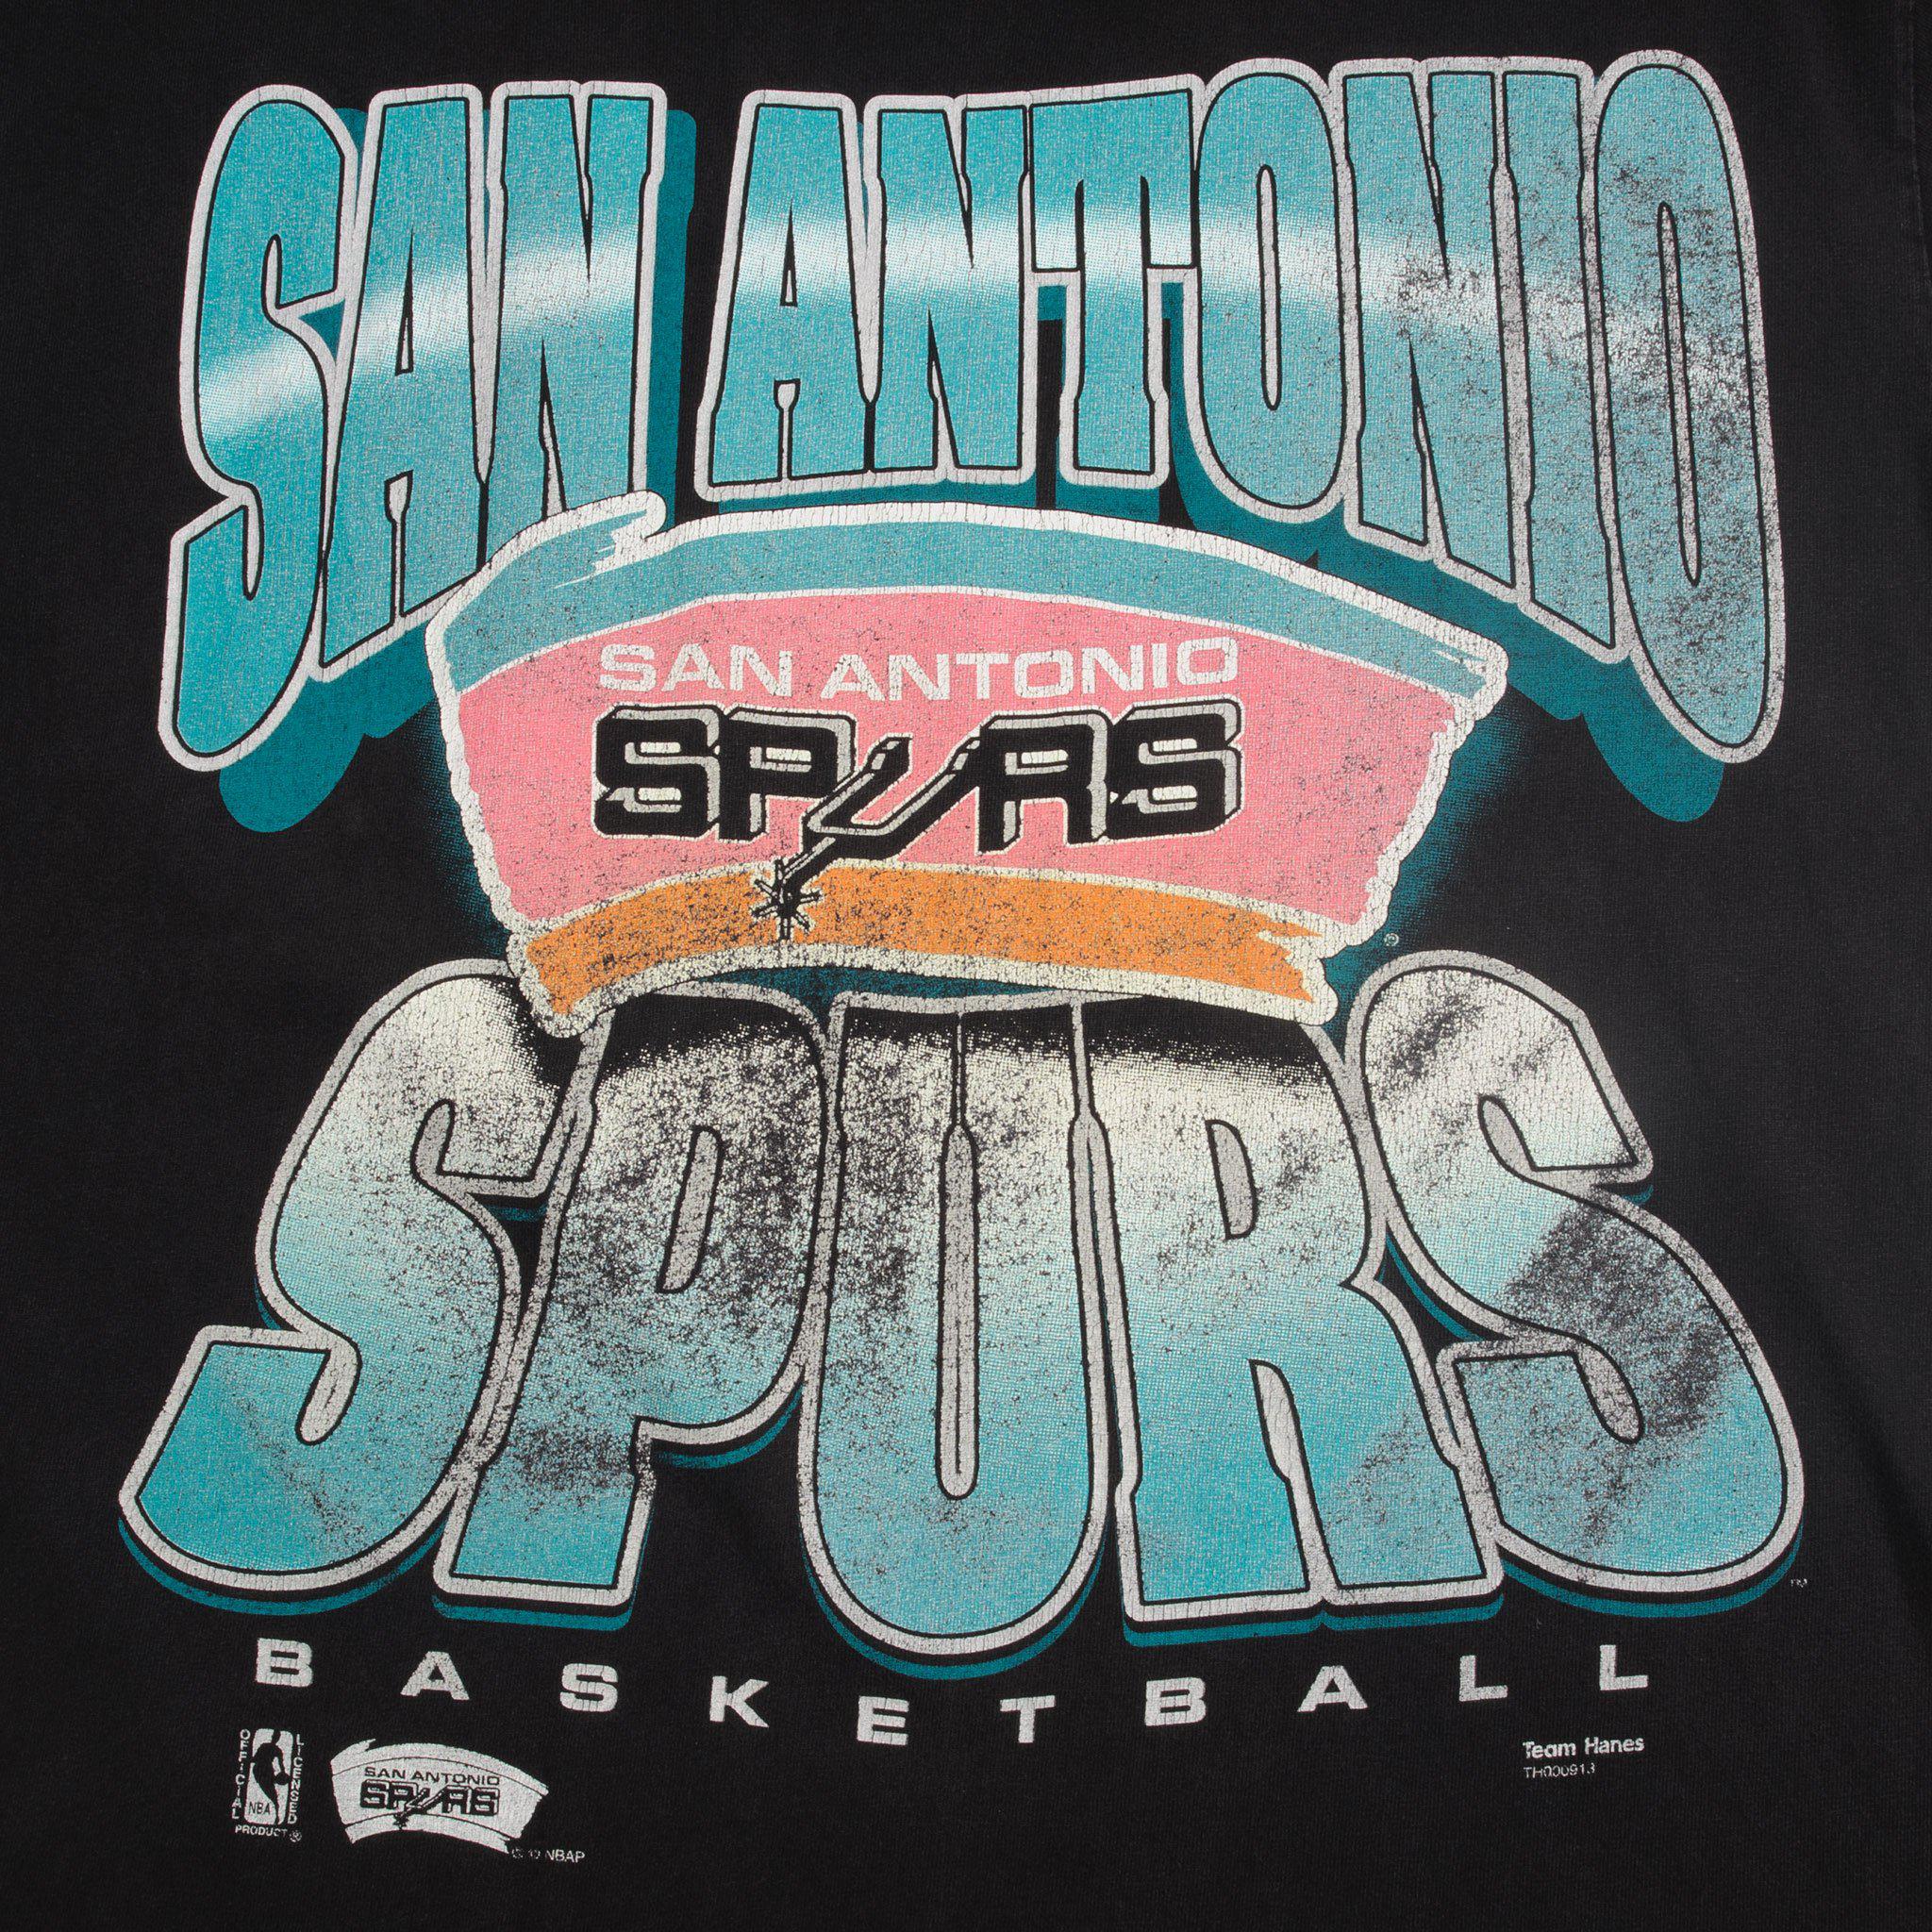 Rare Vintage 1997 t-shirt San Antonio Spurs NBA Pro Edge XL